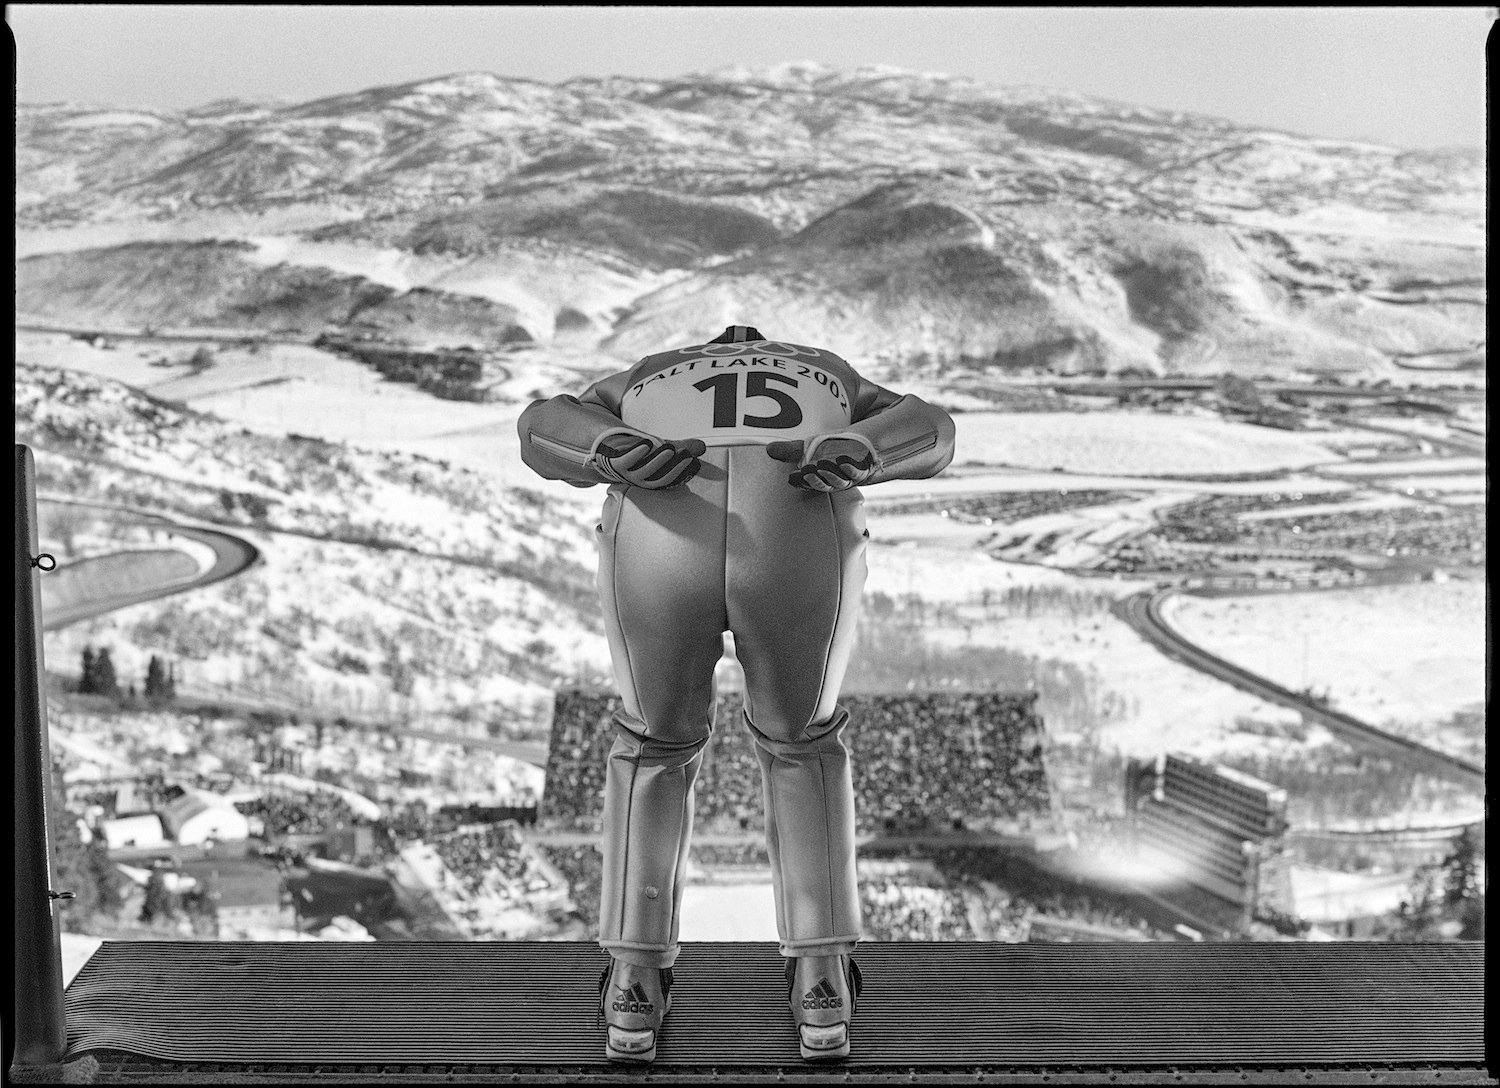 David Burnett, Ski Jump, Park City, Utah, USA, February 2002. Courtesy of David Burnett/Anastasia Photo/Contact Press Images.